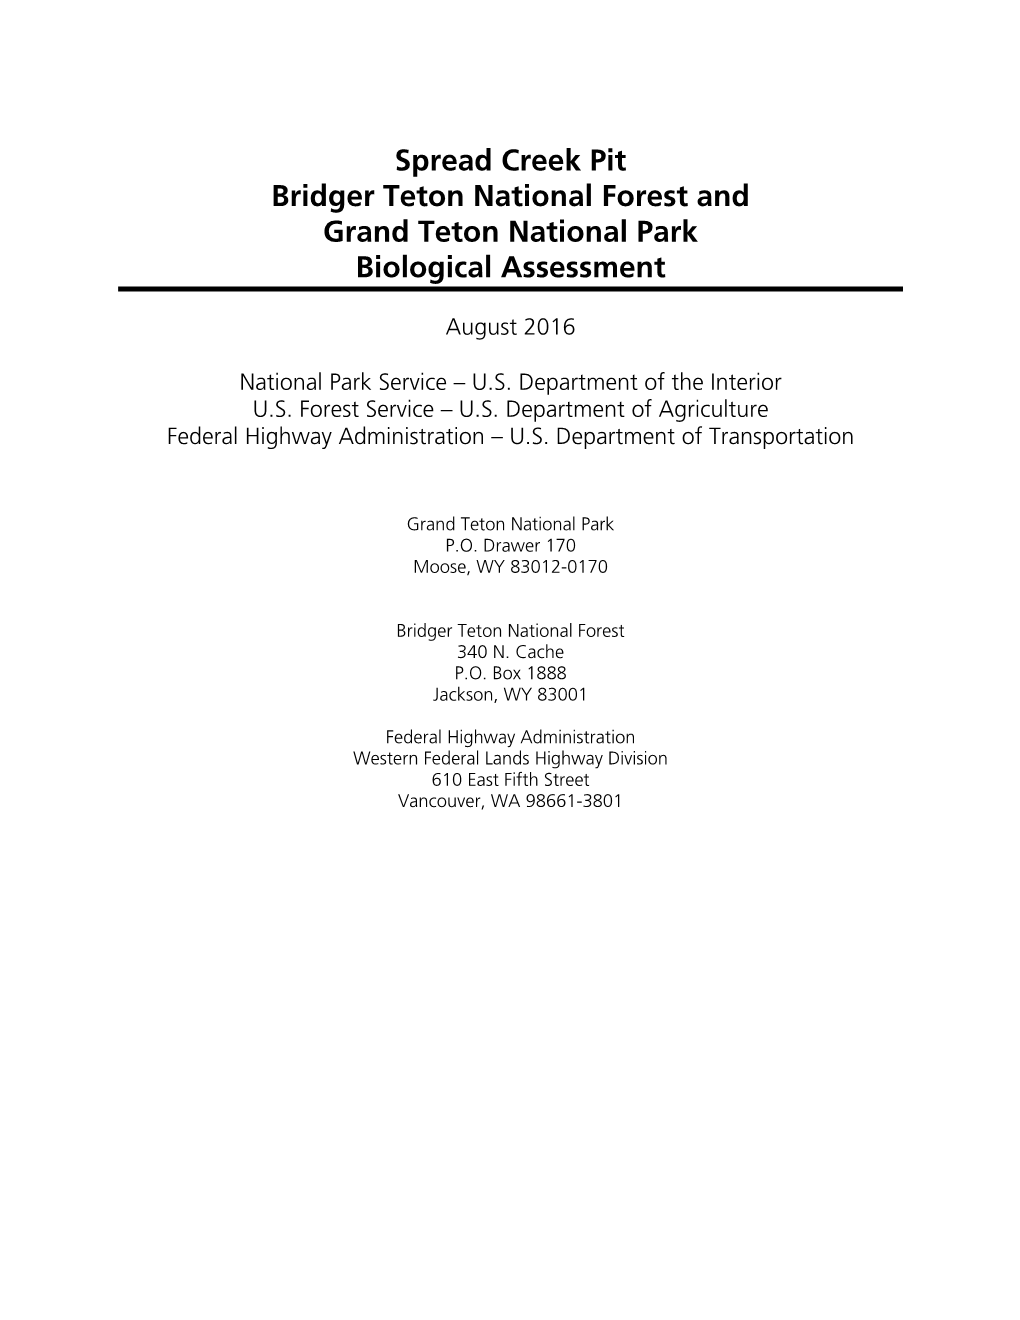 Spread Creek Pit Bridger Teton National Forest and Grand Teton National Park Biological Assessment